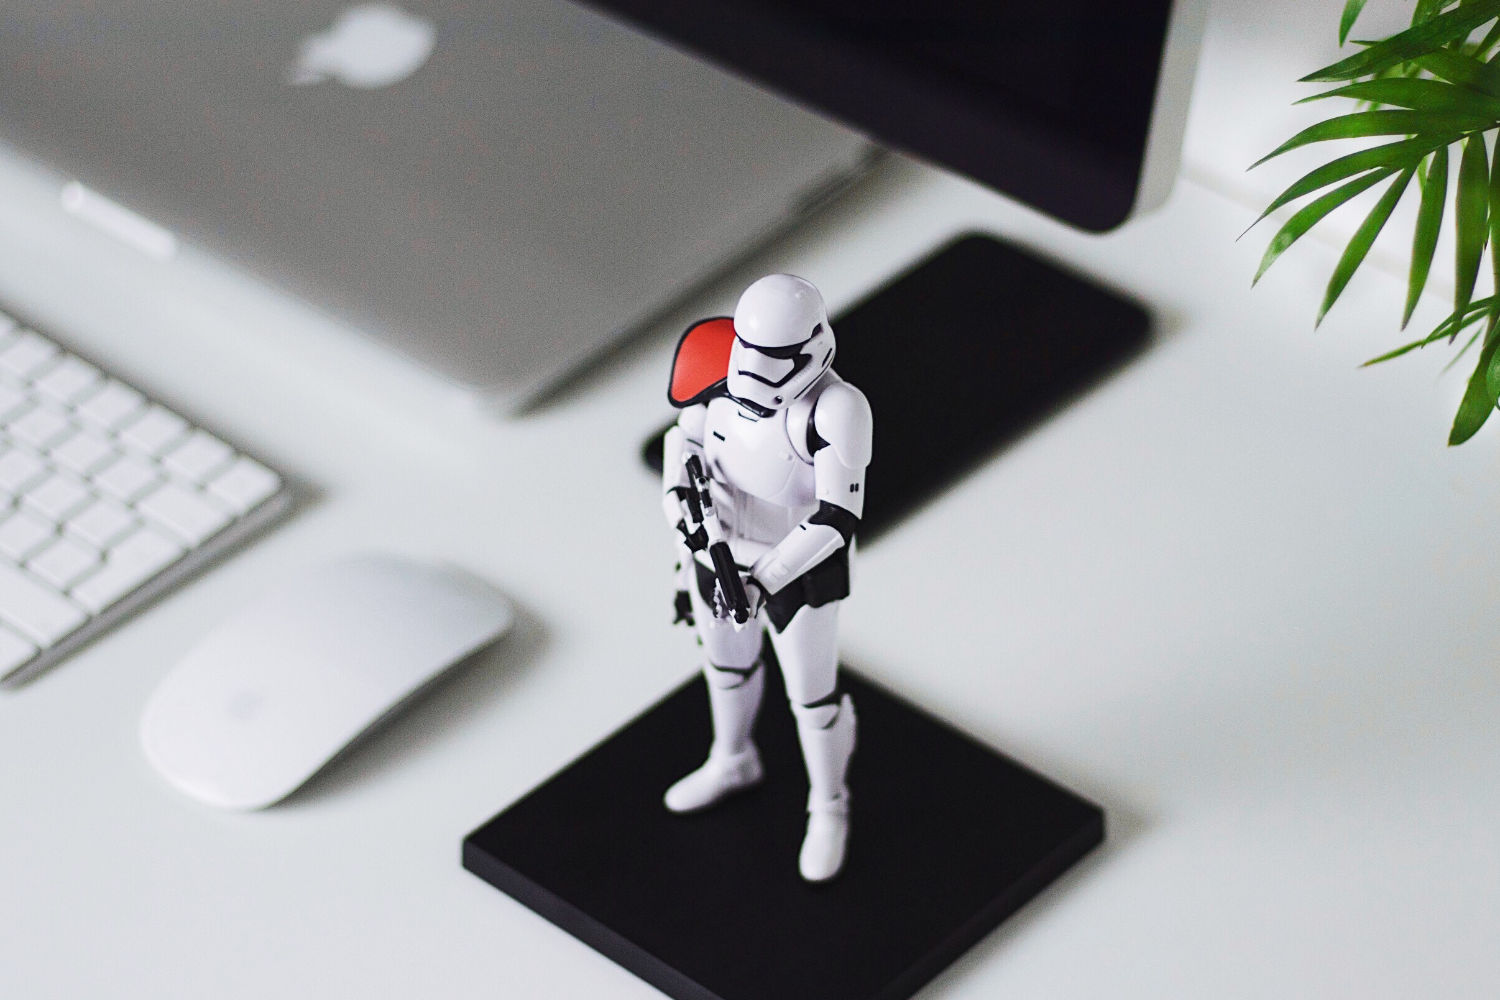 Toy stormtrooper next to laptop